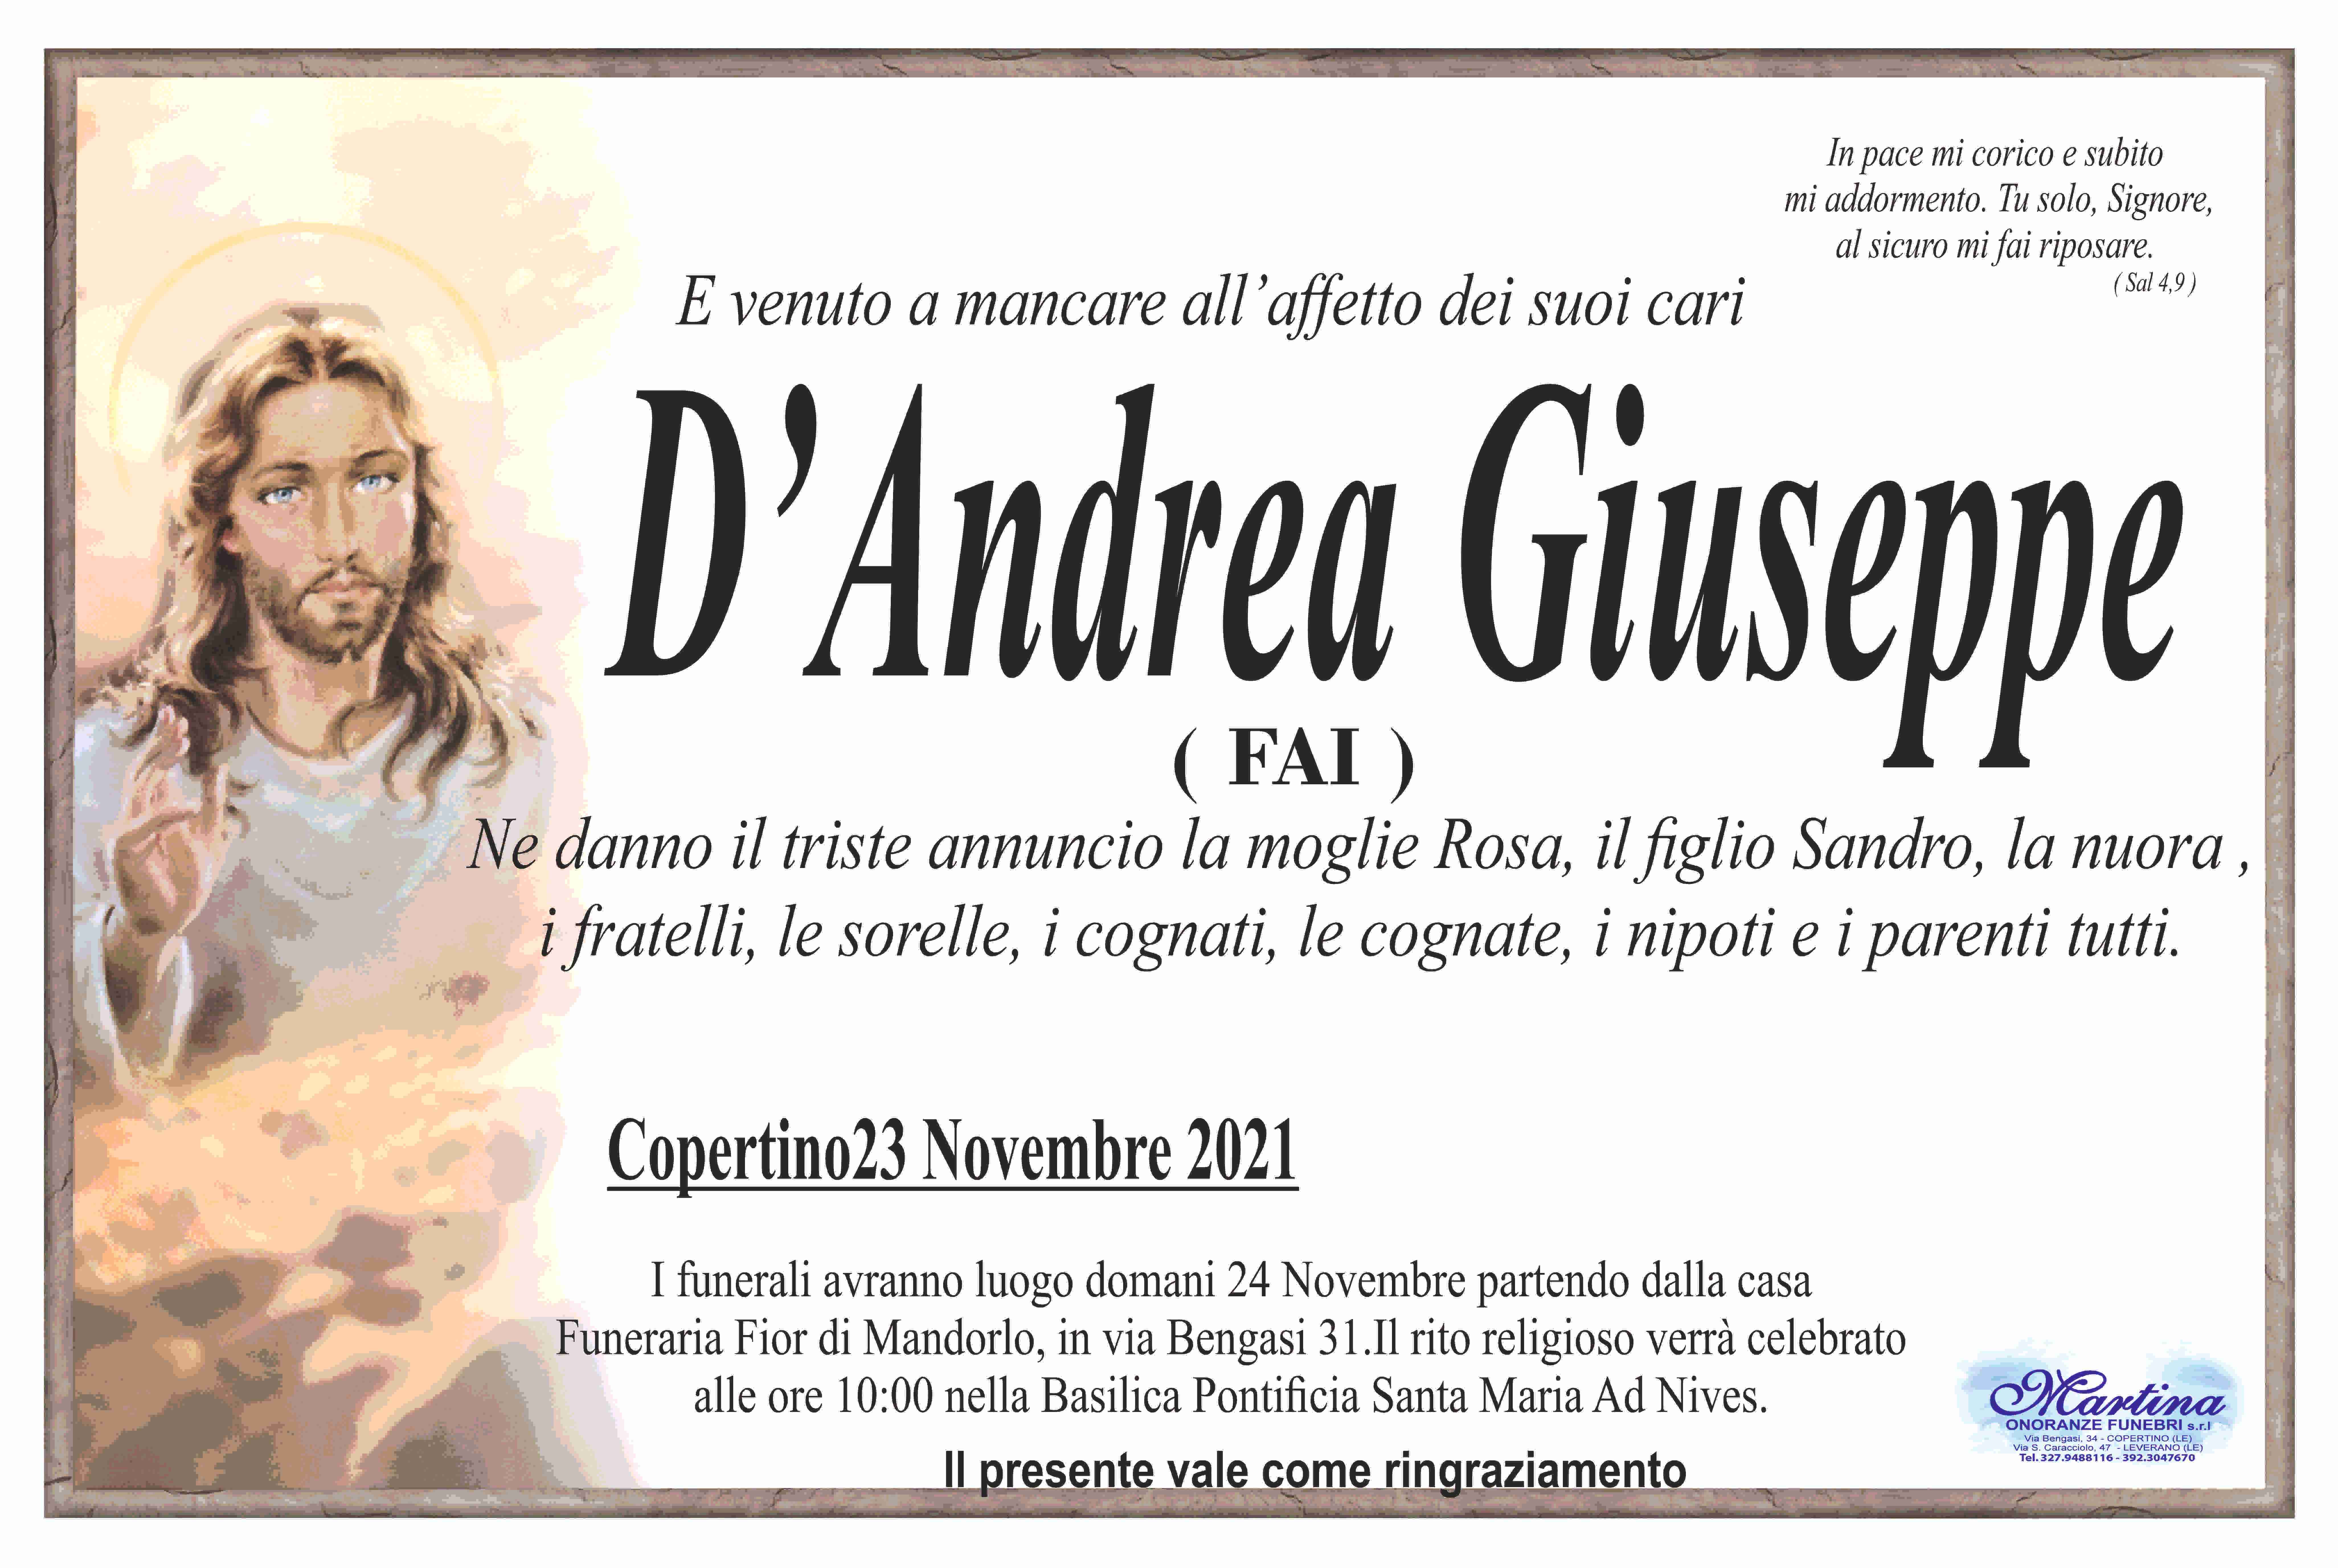 Giuseppe D'Andrea